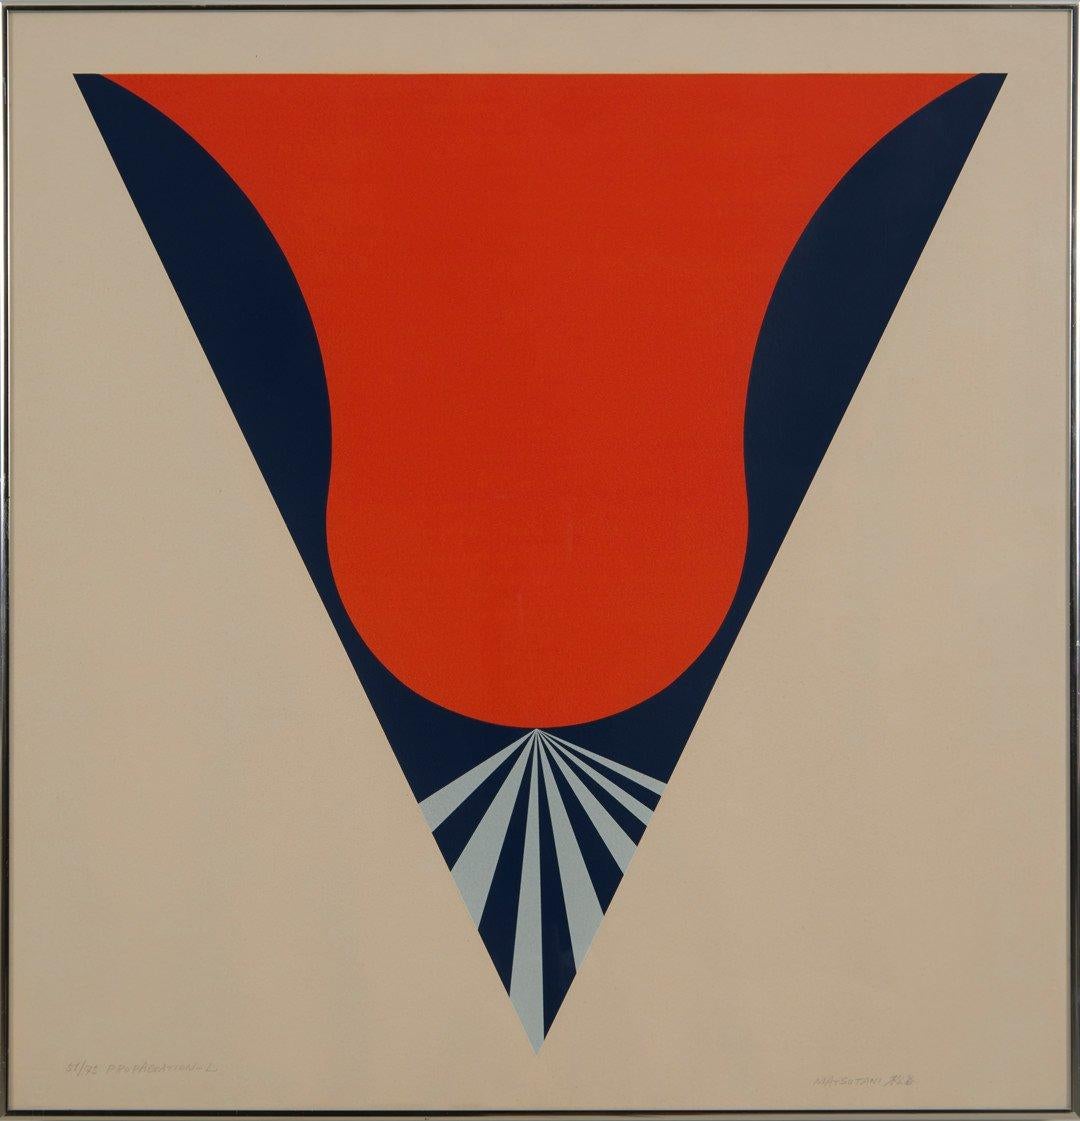 Propagation-L, mid century figurative abstract screenprint, 20th century artist - Print by Takesada Matsutani